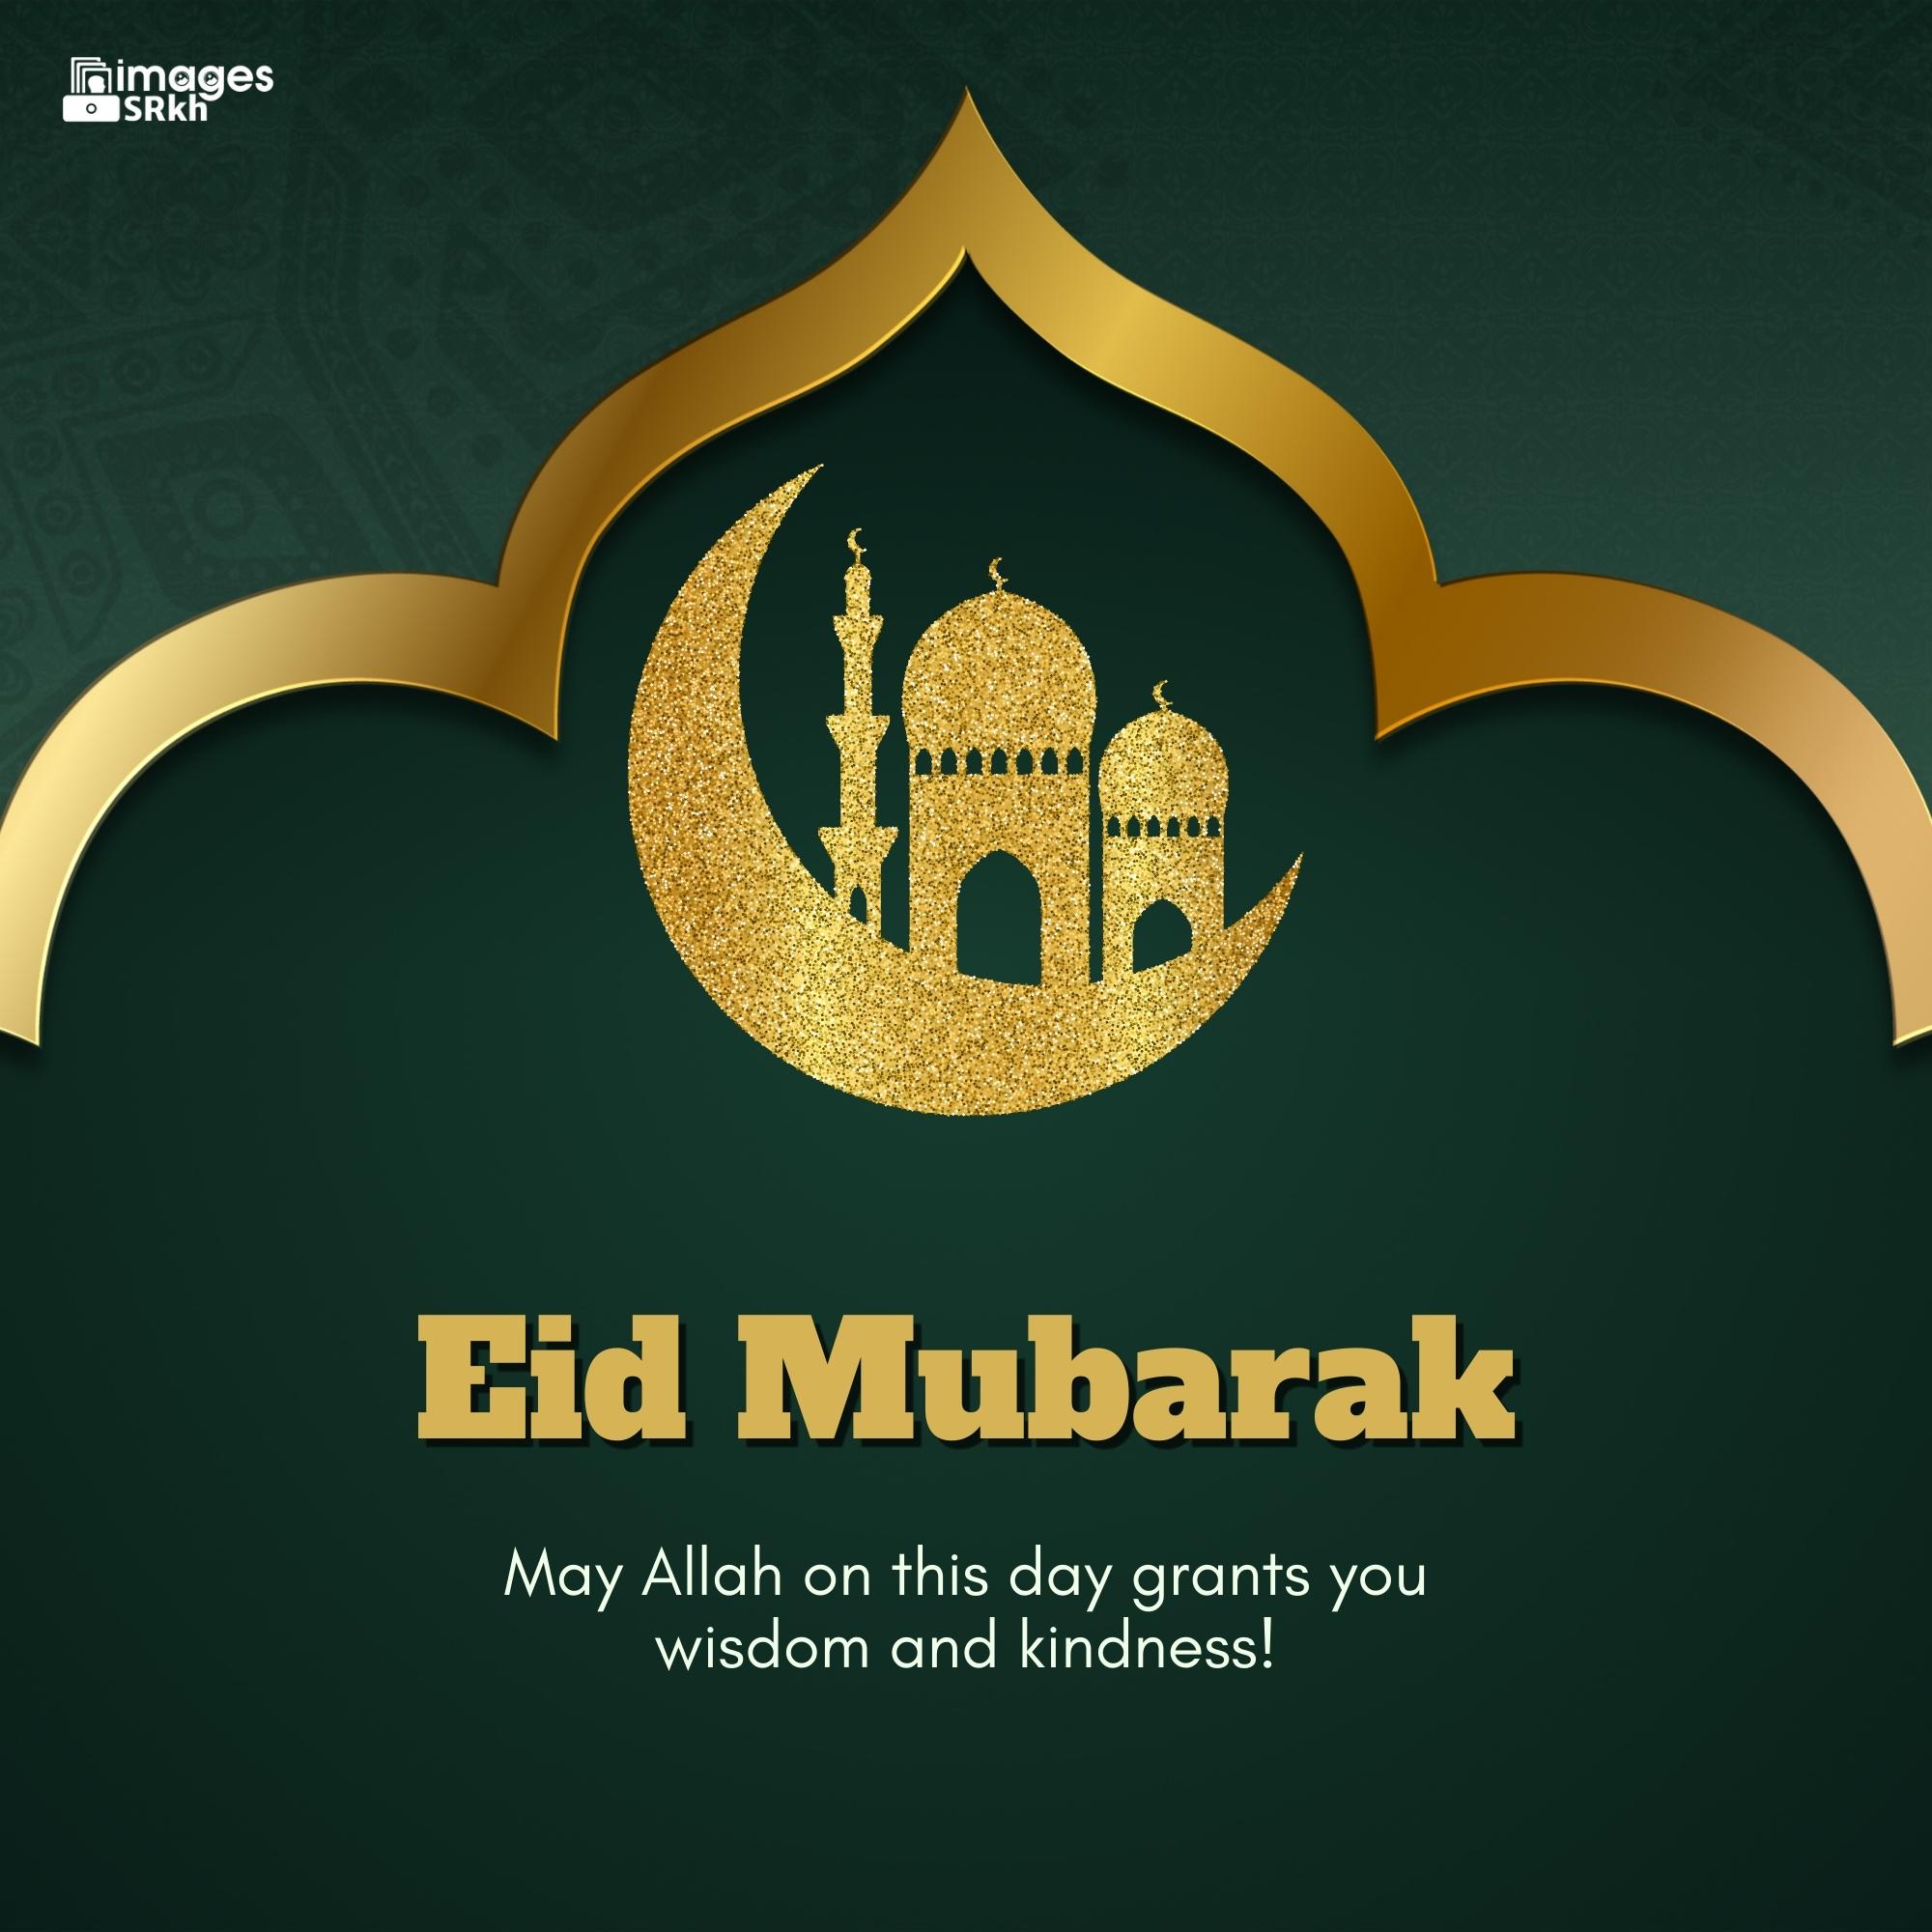 Wish For Eid Mubarak (4) | Download free in Hd Quality | imagesSRkh